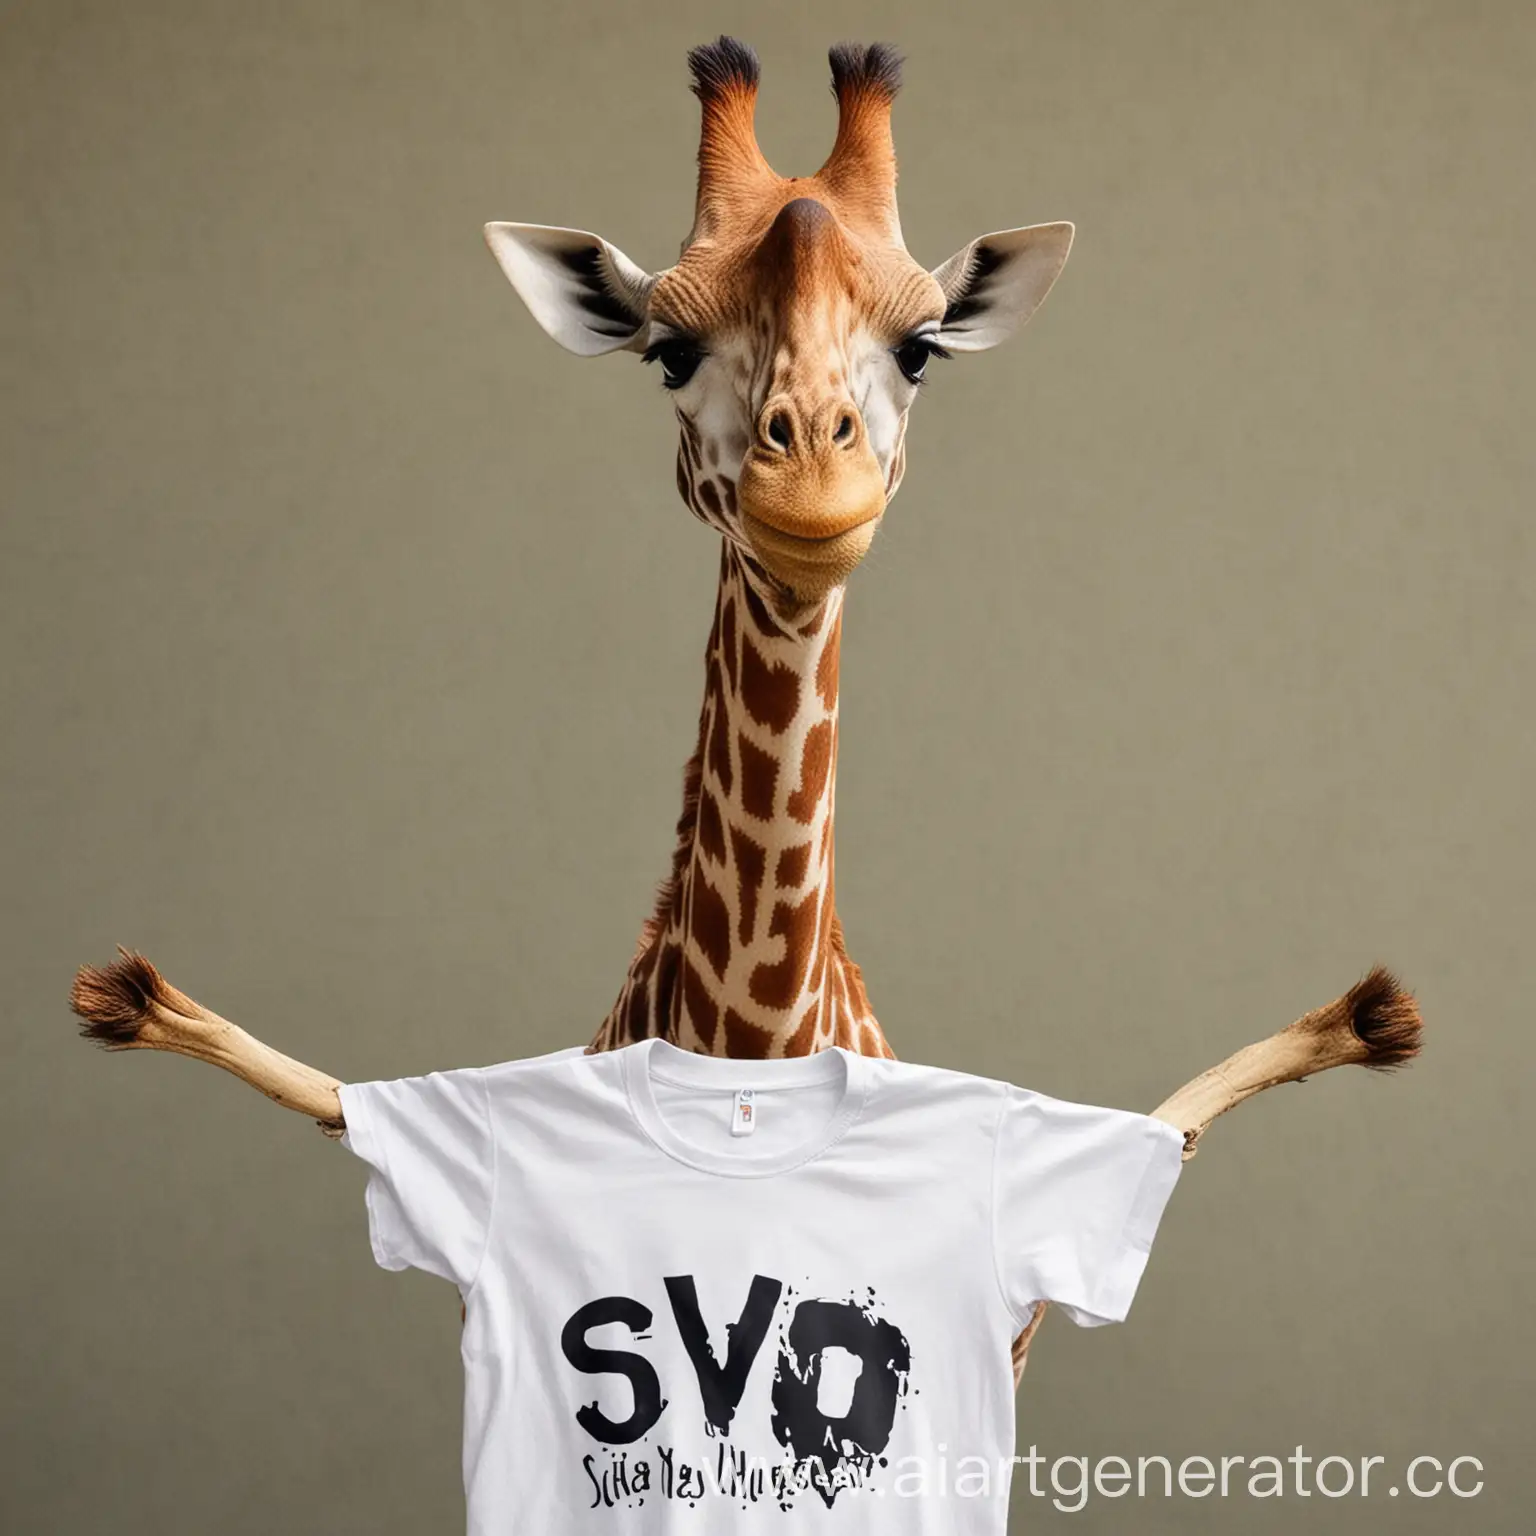 Giraffe-Wearing-TShirt-with-SVO-Print